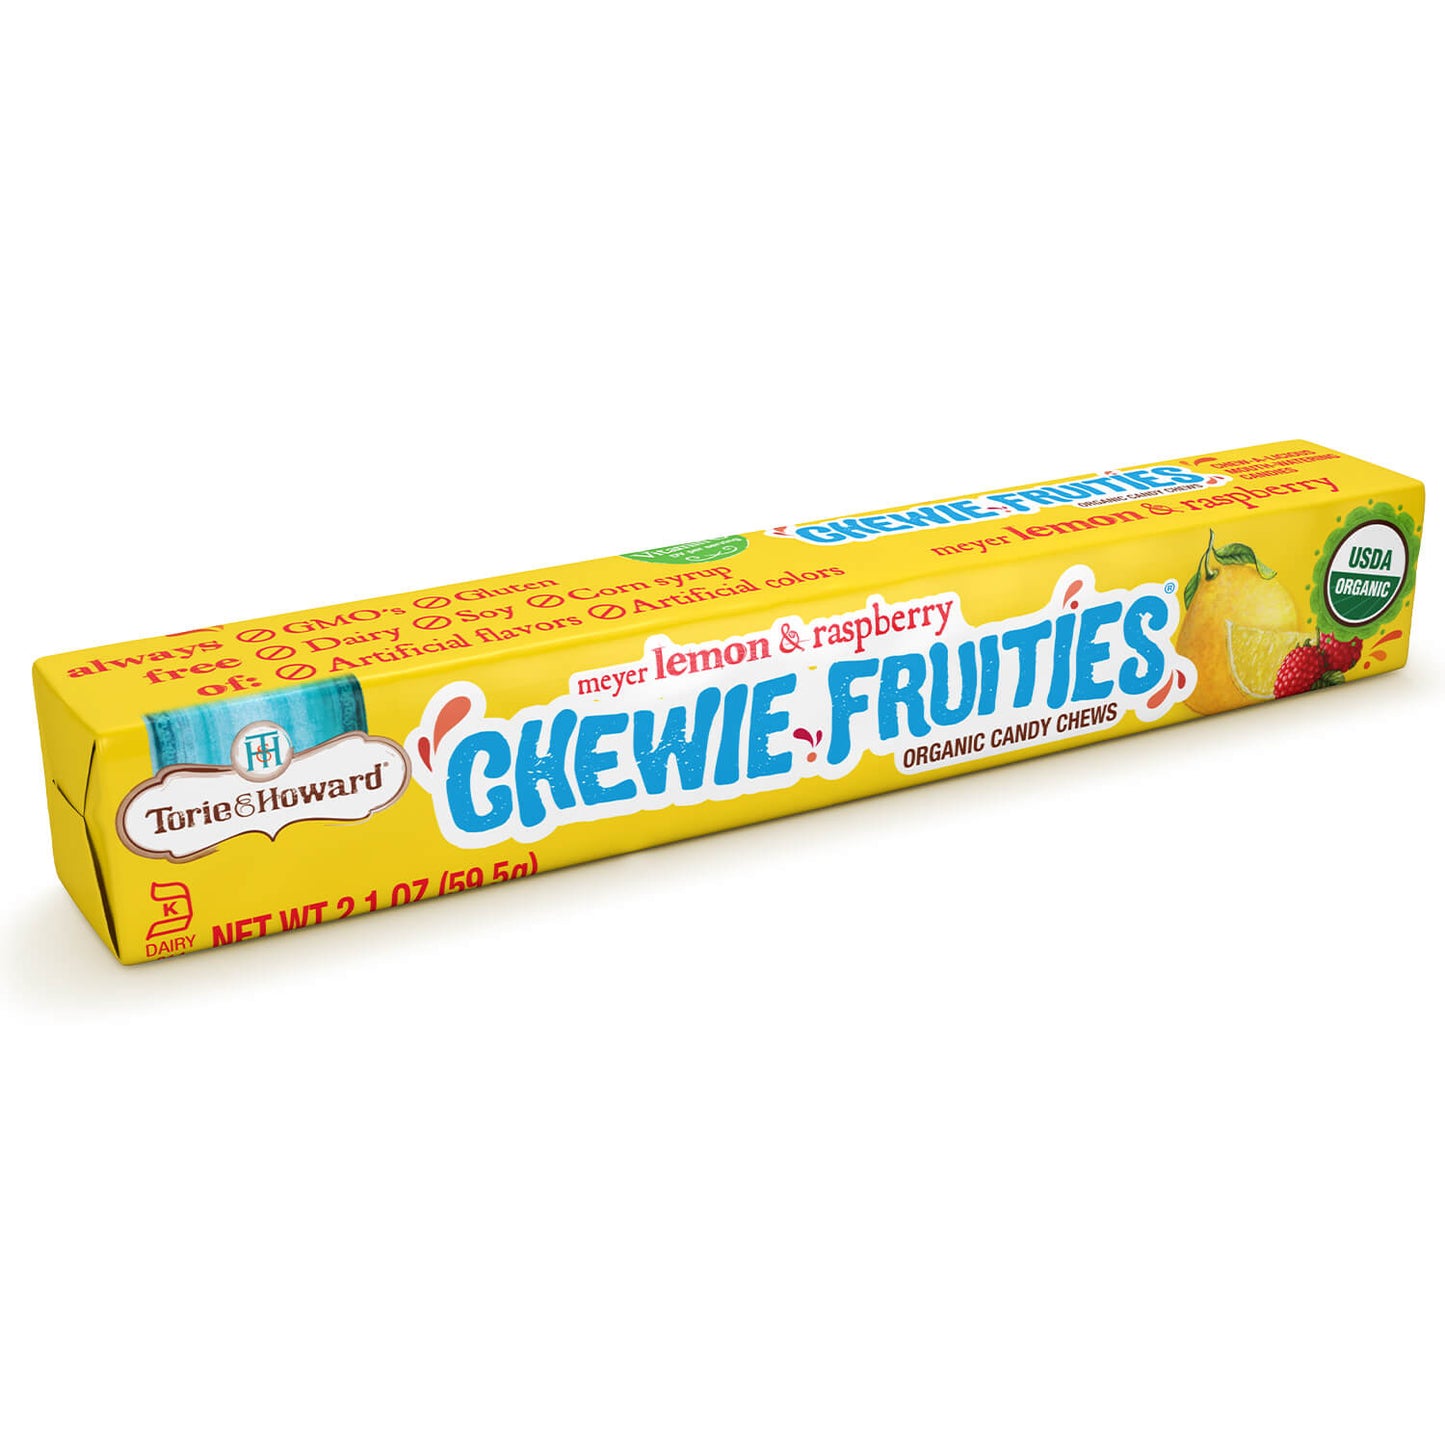 Torie & Howard Chewie Fruities Meyer Lemon & Raspberry Candy, Front of 2.1oz Stick Pack